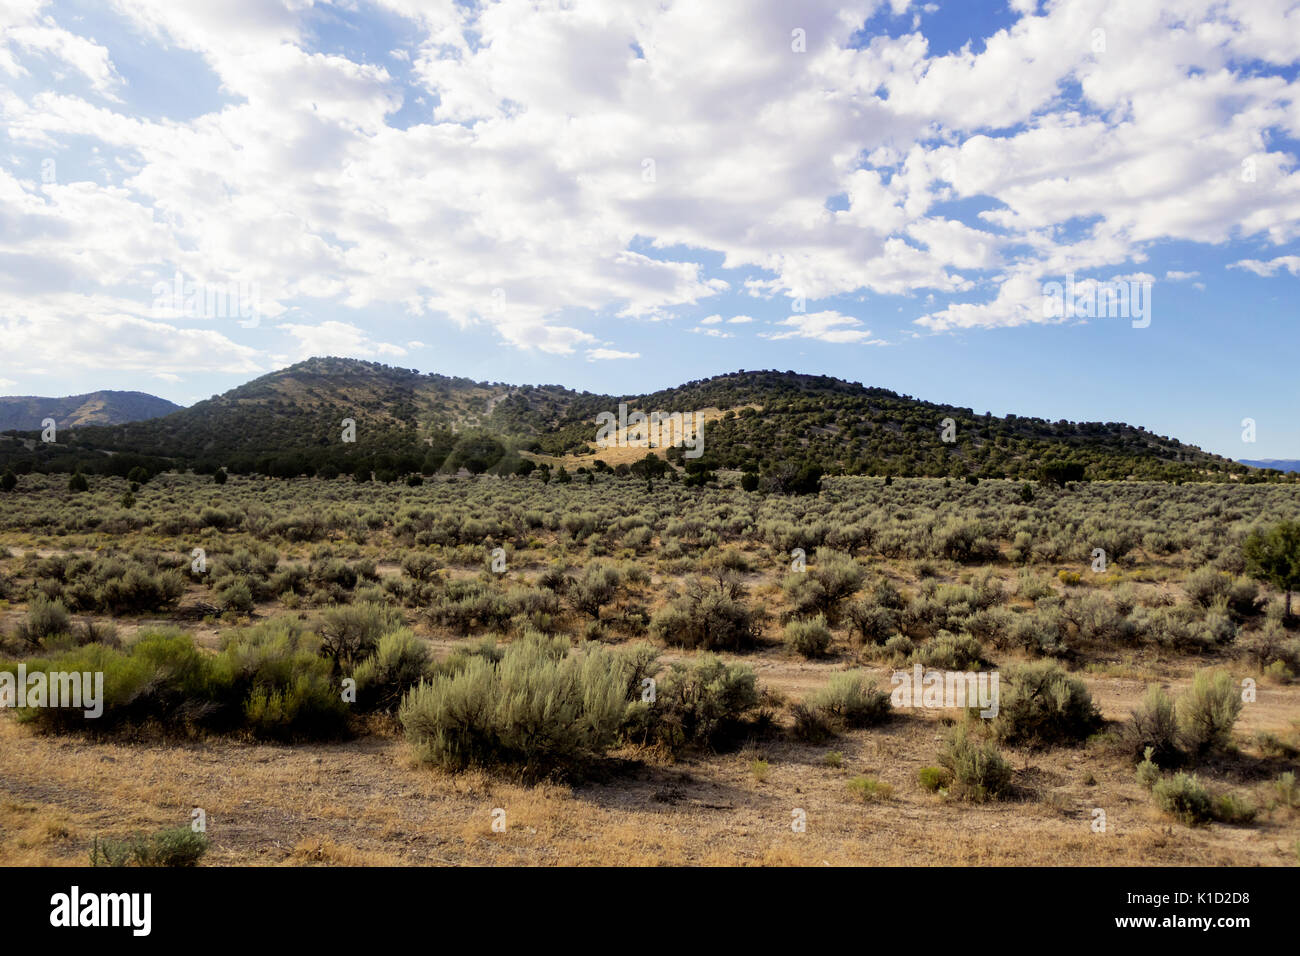 A mountain in the desert in Utah. Stock Photo